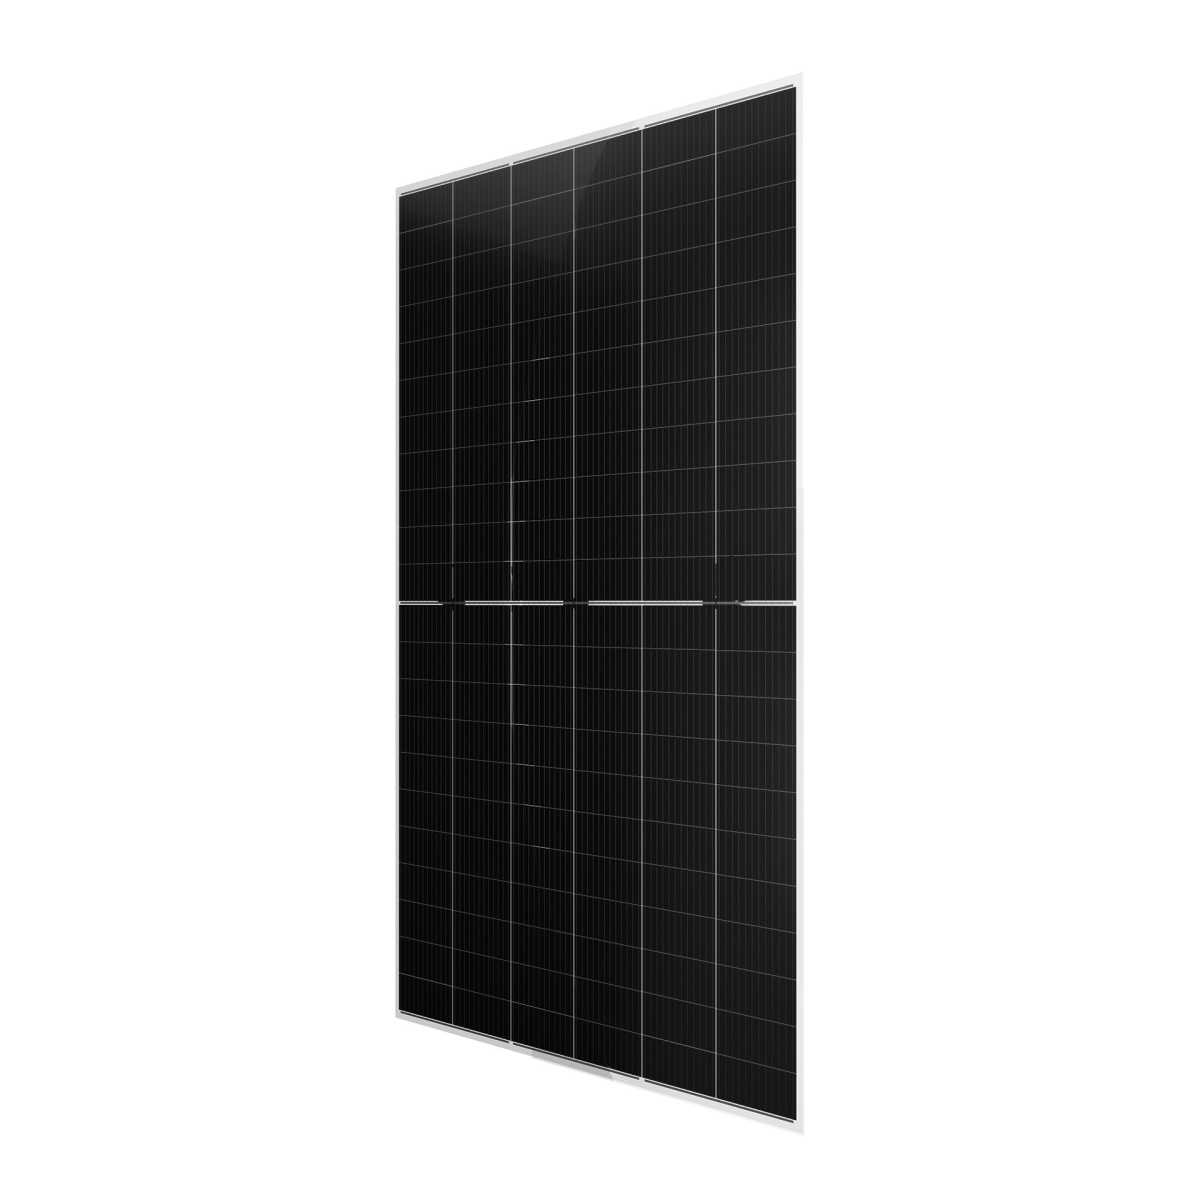 TommaTech 670Wp M6 132PM Cells Bifacial G2G Half-Cut MB Solar Panel